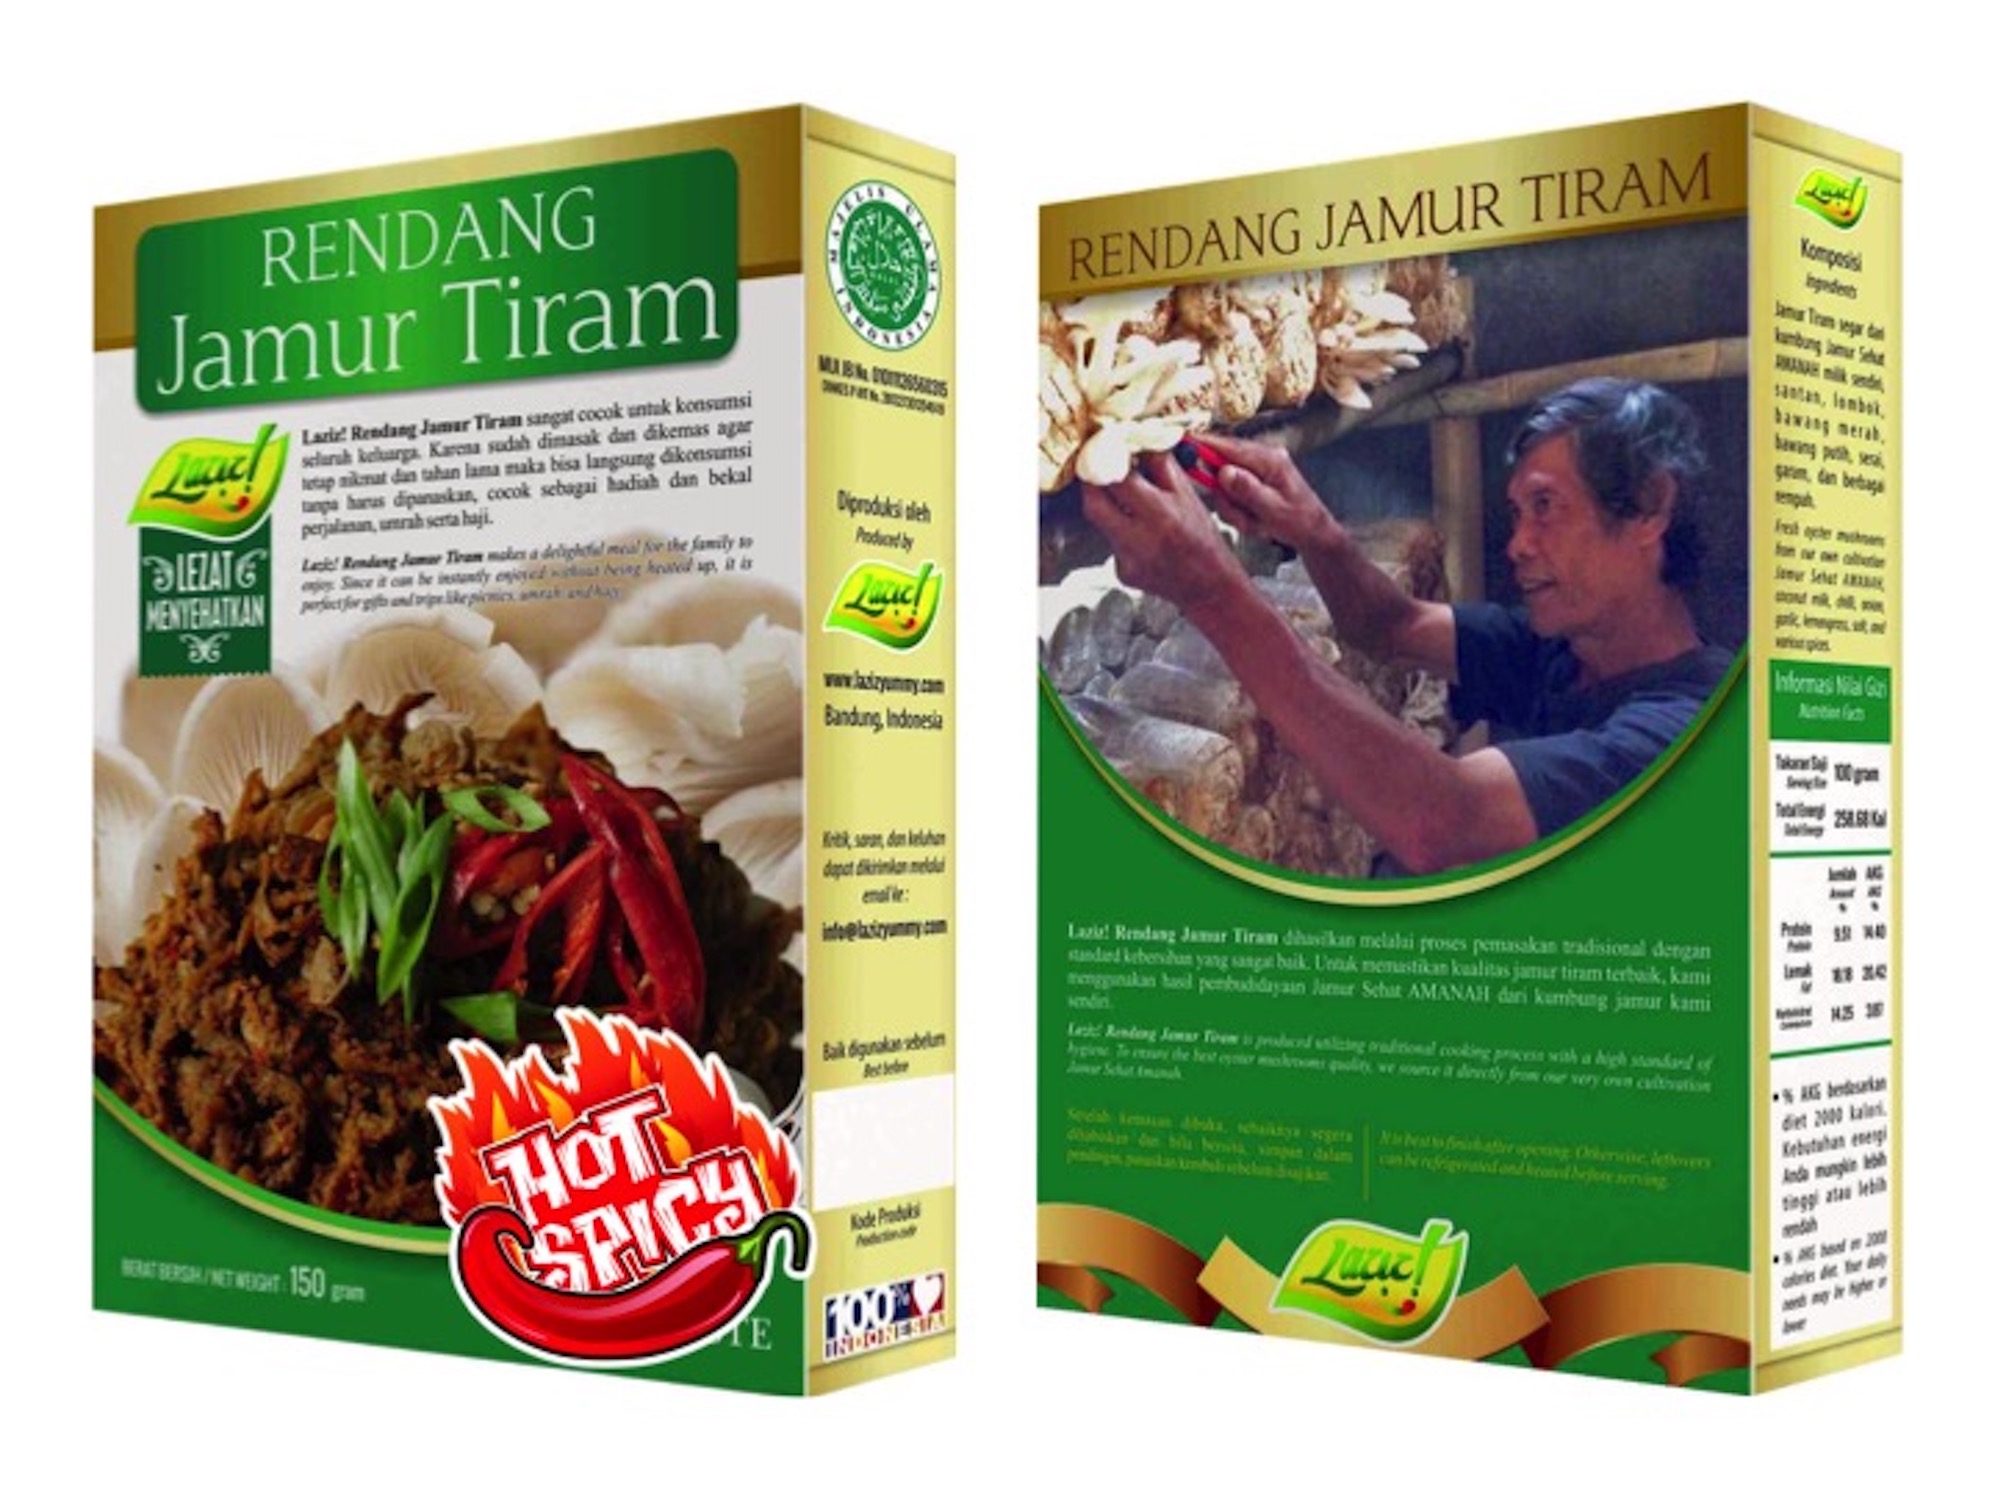 Rendang Jamur Tiram Hot Spicy